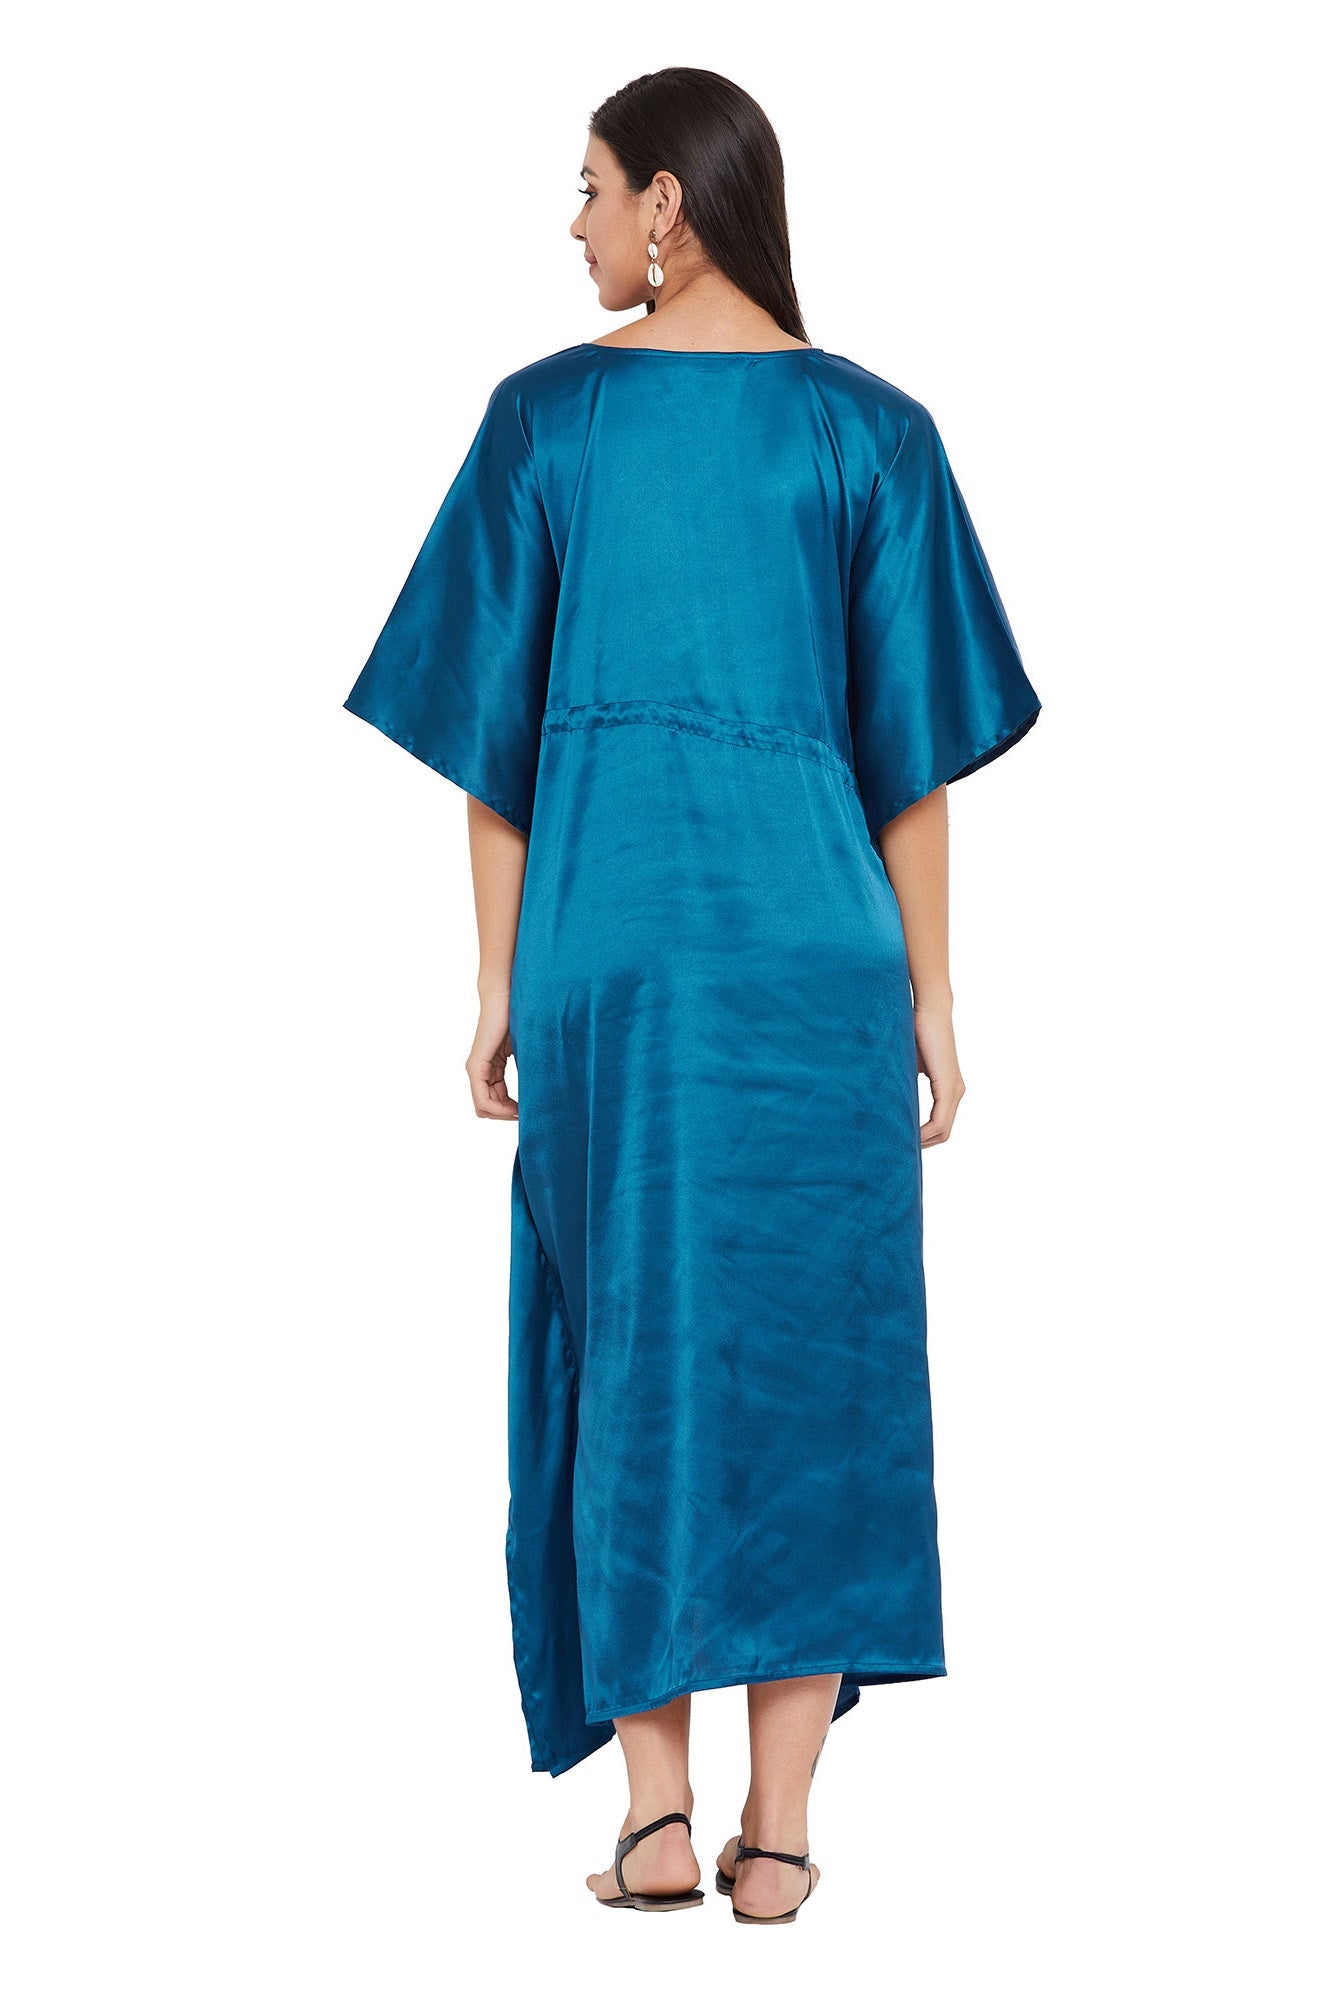 Solid Blue Kaftan: Elegant Fusion Fashion